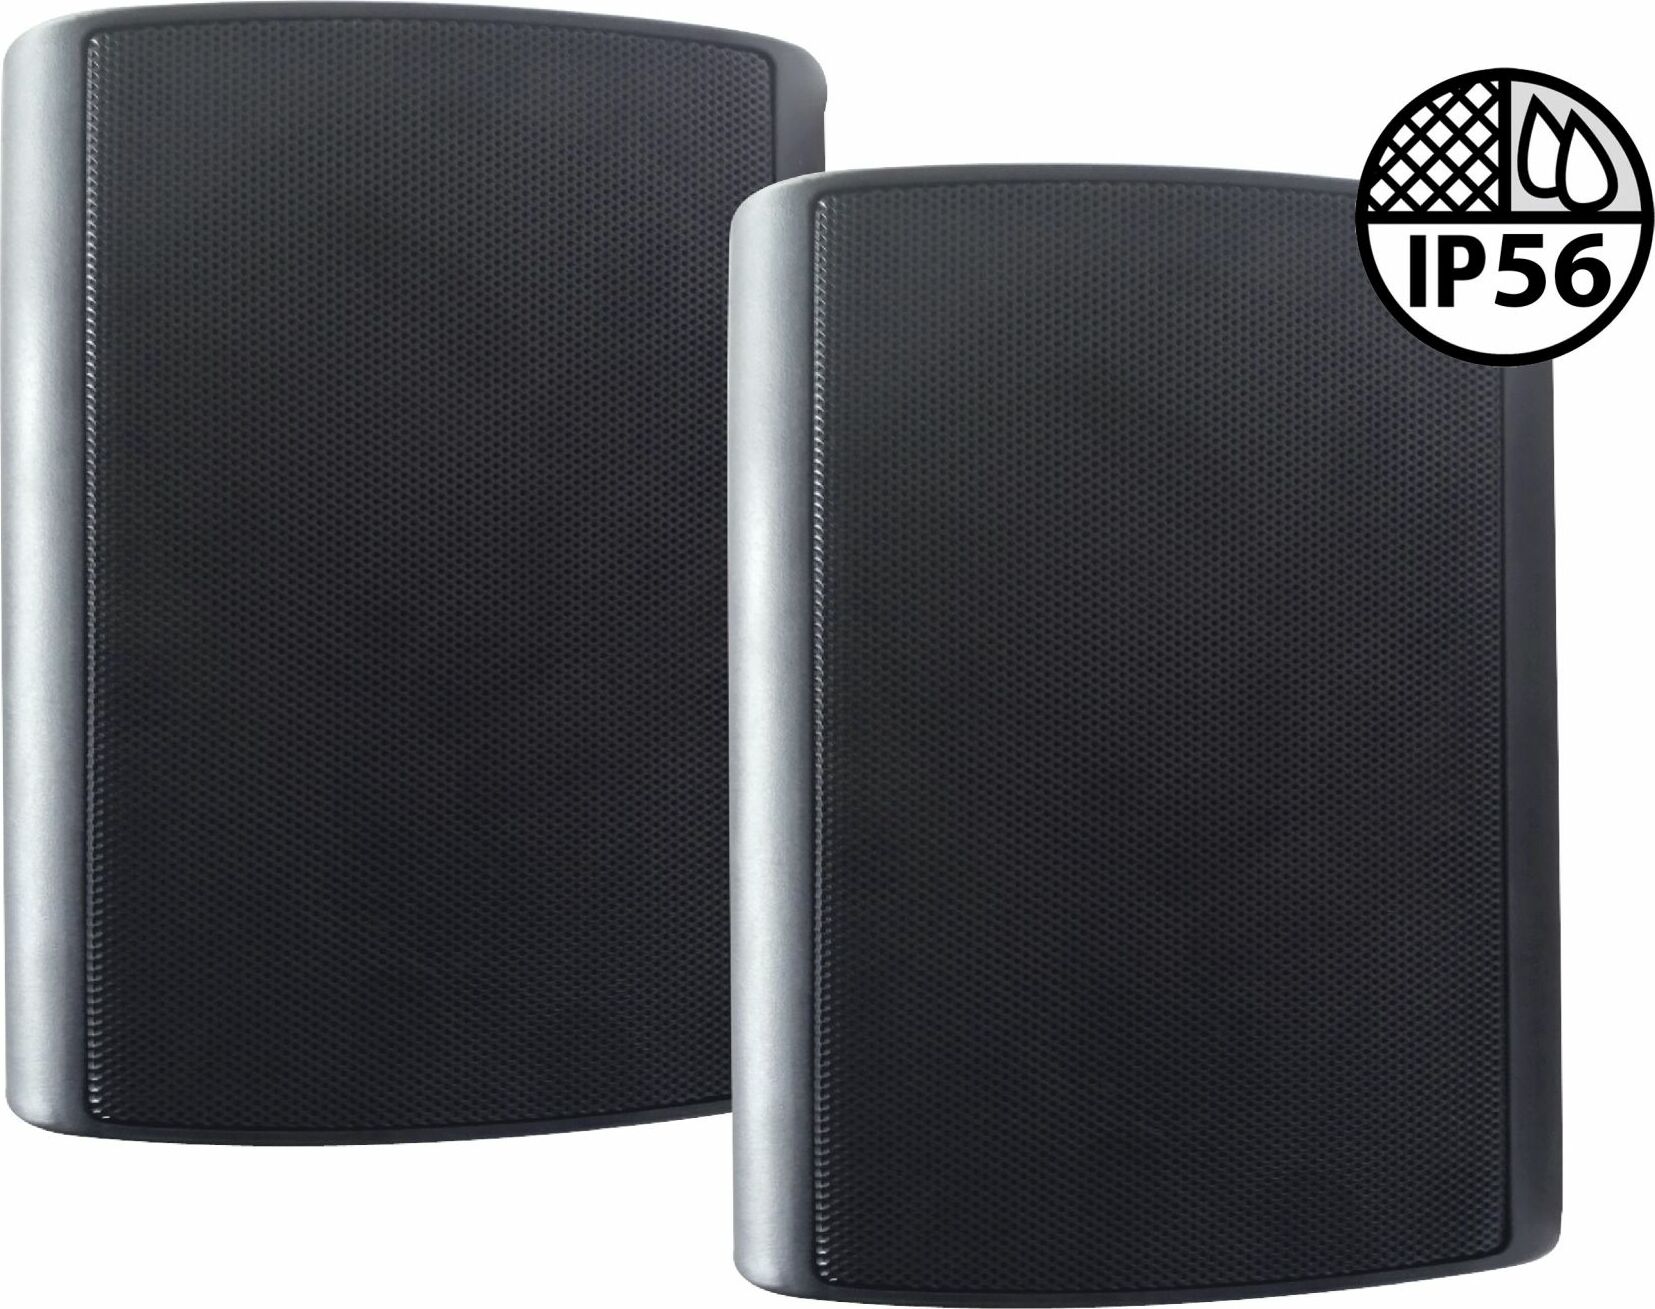 Definitive Audio B 106 Black Ip 56 - Installation speakers - Main picture